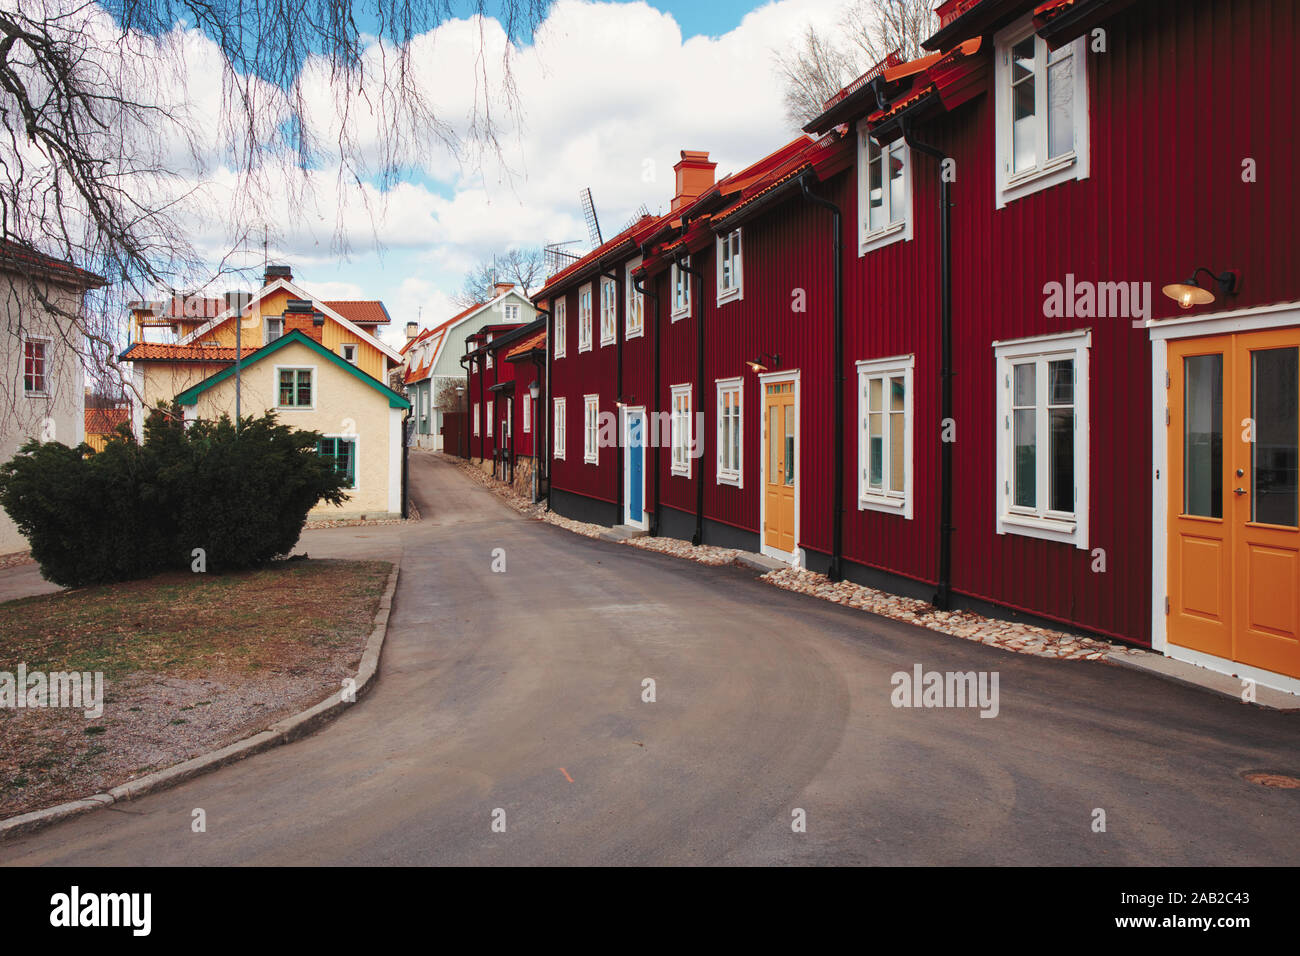 Strada di legname falu rosso case, Strangnas, Contea di Sodermanland, Svezia Foto Stock